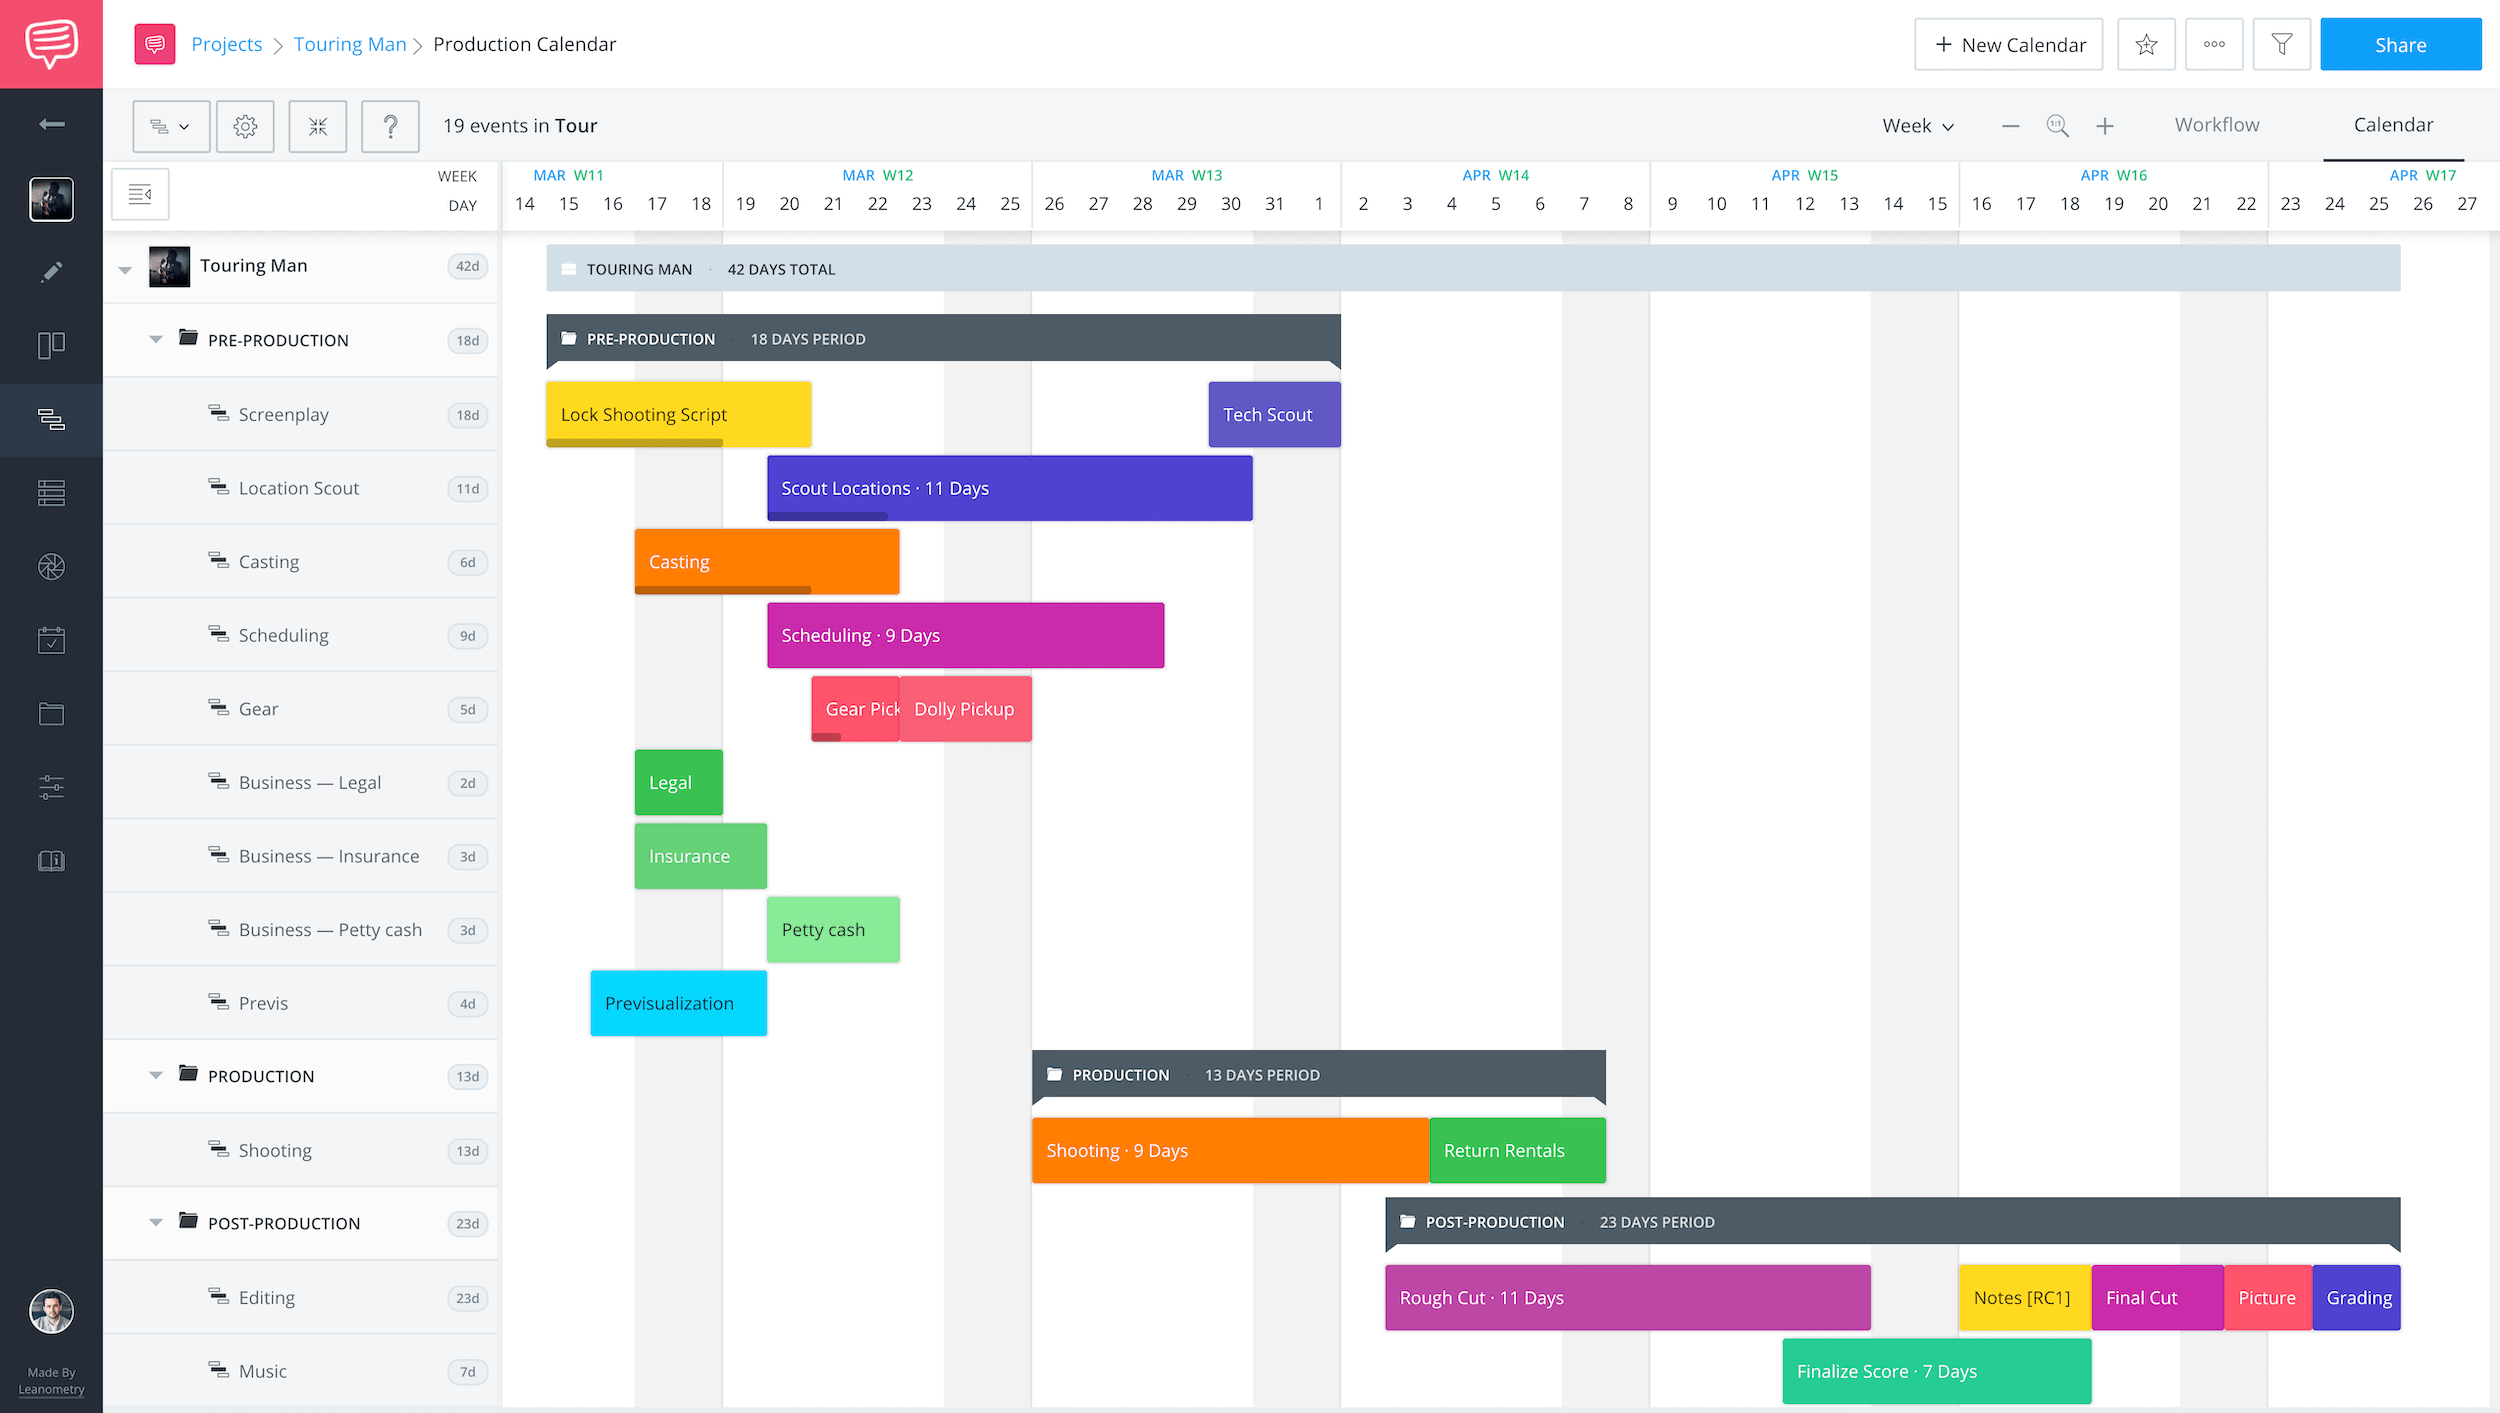 Production Calendar - Project Management - StudioBinder